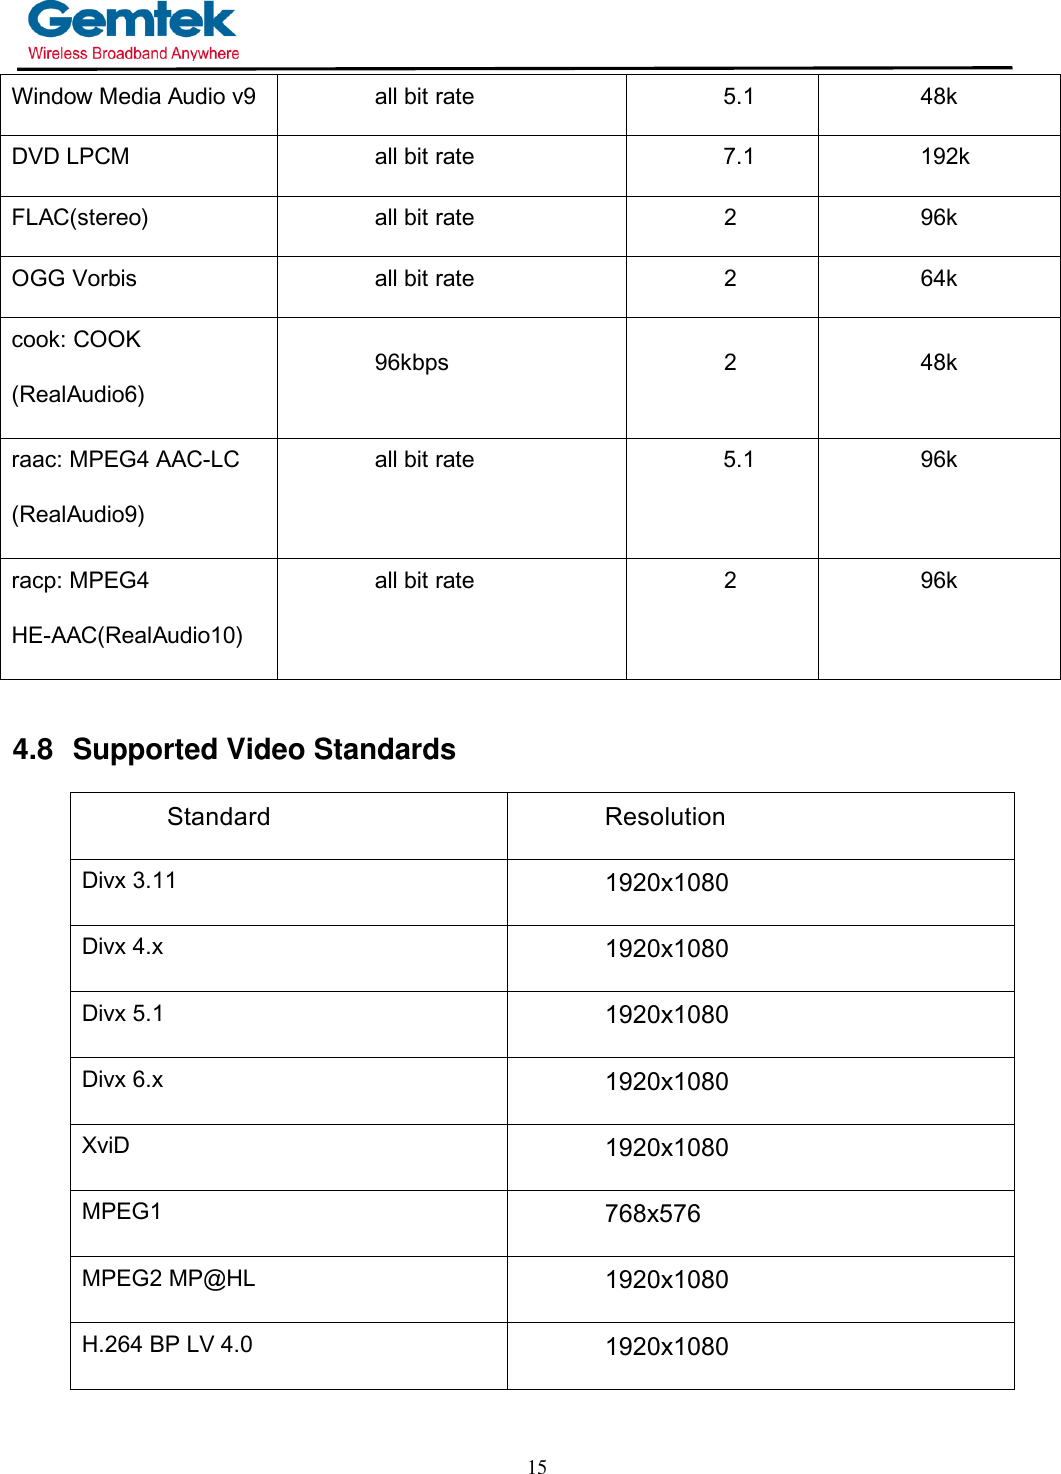    Window Media Audio v9 all bit rate 5.1 48k DVD LPCM all bit rate 7.1 192k FLAC(stereo) all bit rate 2 96k OGG Vorbis all bit rate 2 64k cook: COOK  (RealAudio6)  96kbps  2  48k raac: MPEG4 AAC-LC  (RealAudio9) all bit rate 5.1 96k racp: MPEG4  HE-AAC(RealAudio10) all bit rate 2 96k   4.8  Supported Video Standards  Standard Resolution Divx 3.11 1920x1080 Divx 4.x 1920x1080 Divx 5.1 1920x1080 Divx 6.x 1920x1080 XviD 1920x1080 MPEG1 768x576 MPEG2 MP@HL 1920x1080 H.264 BP LV 4.0 1920x1080    15 